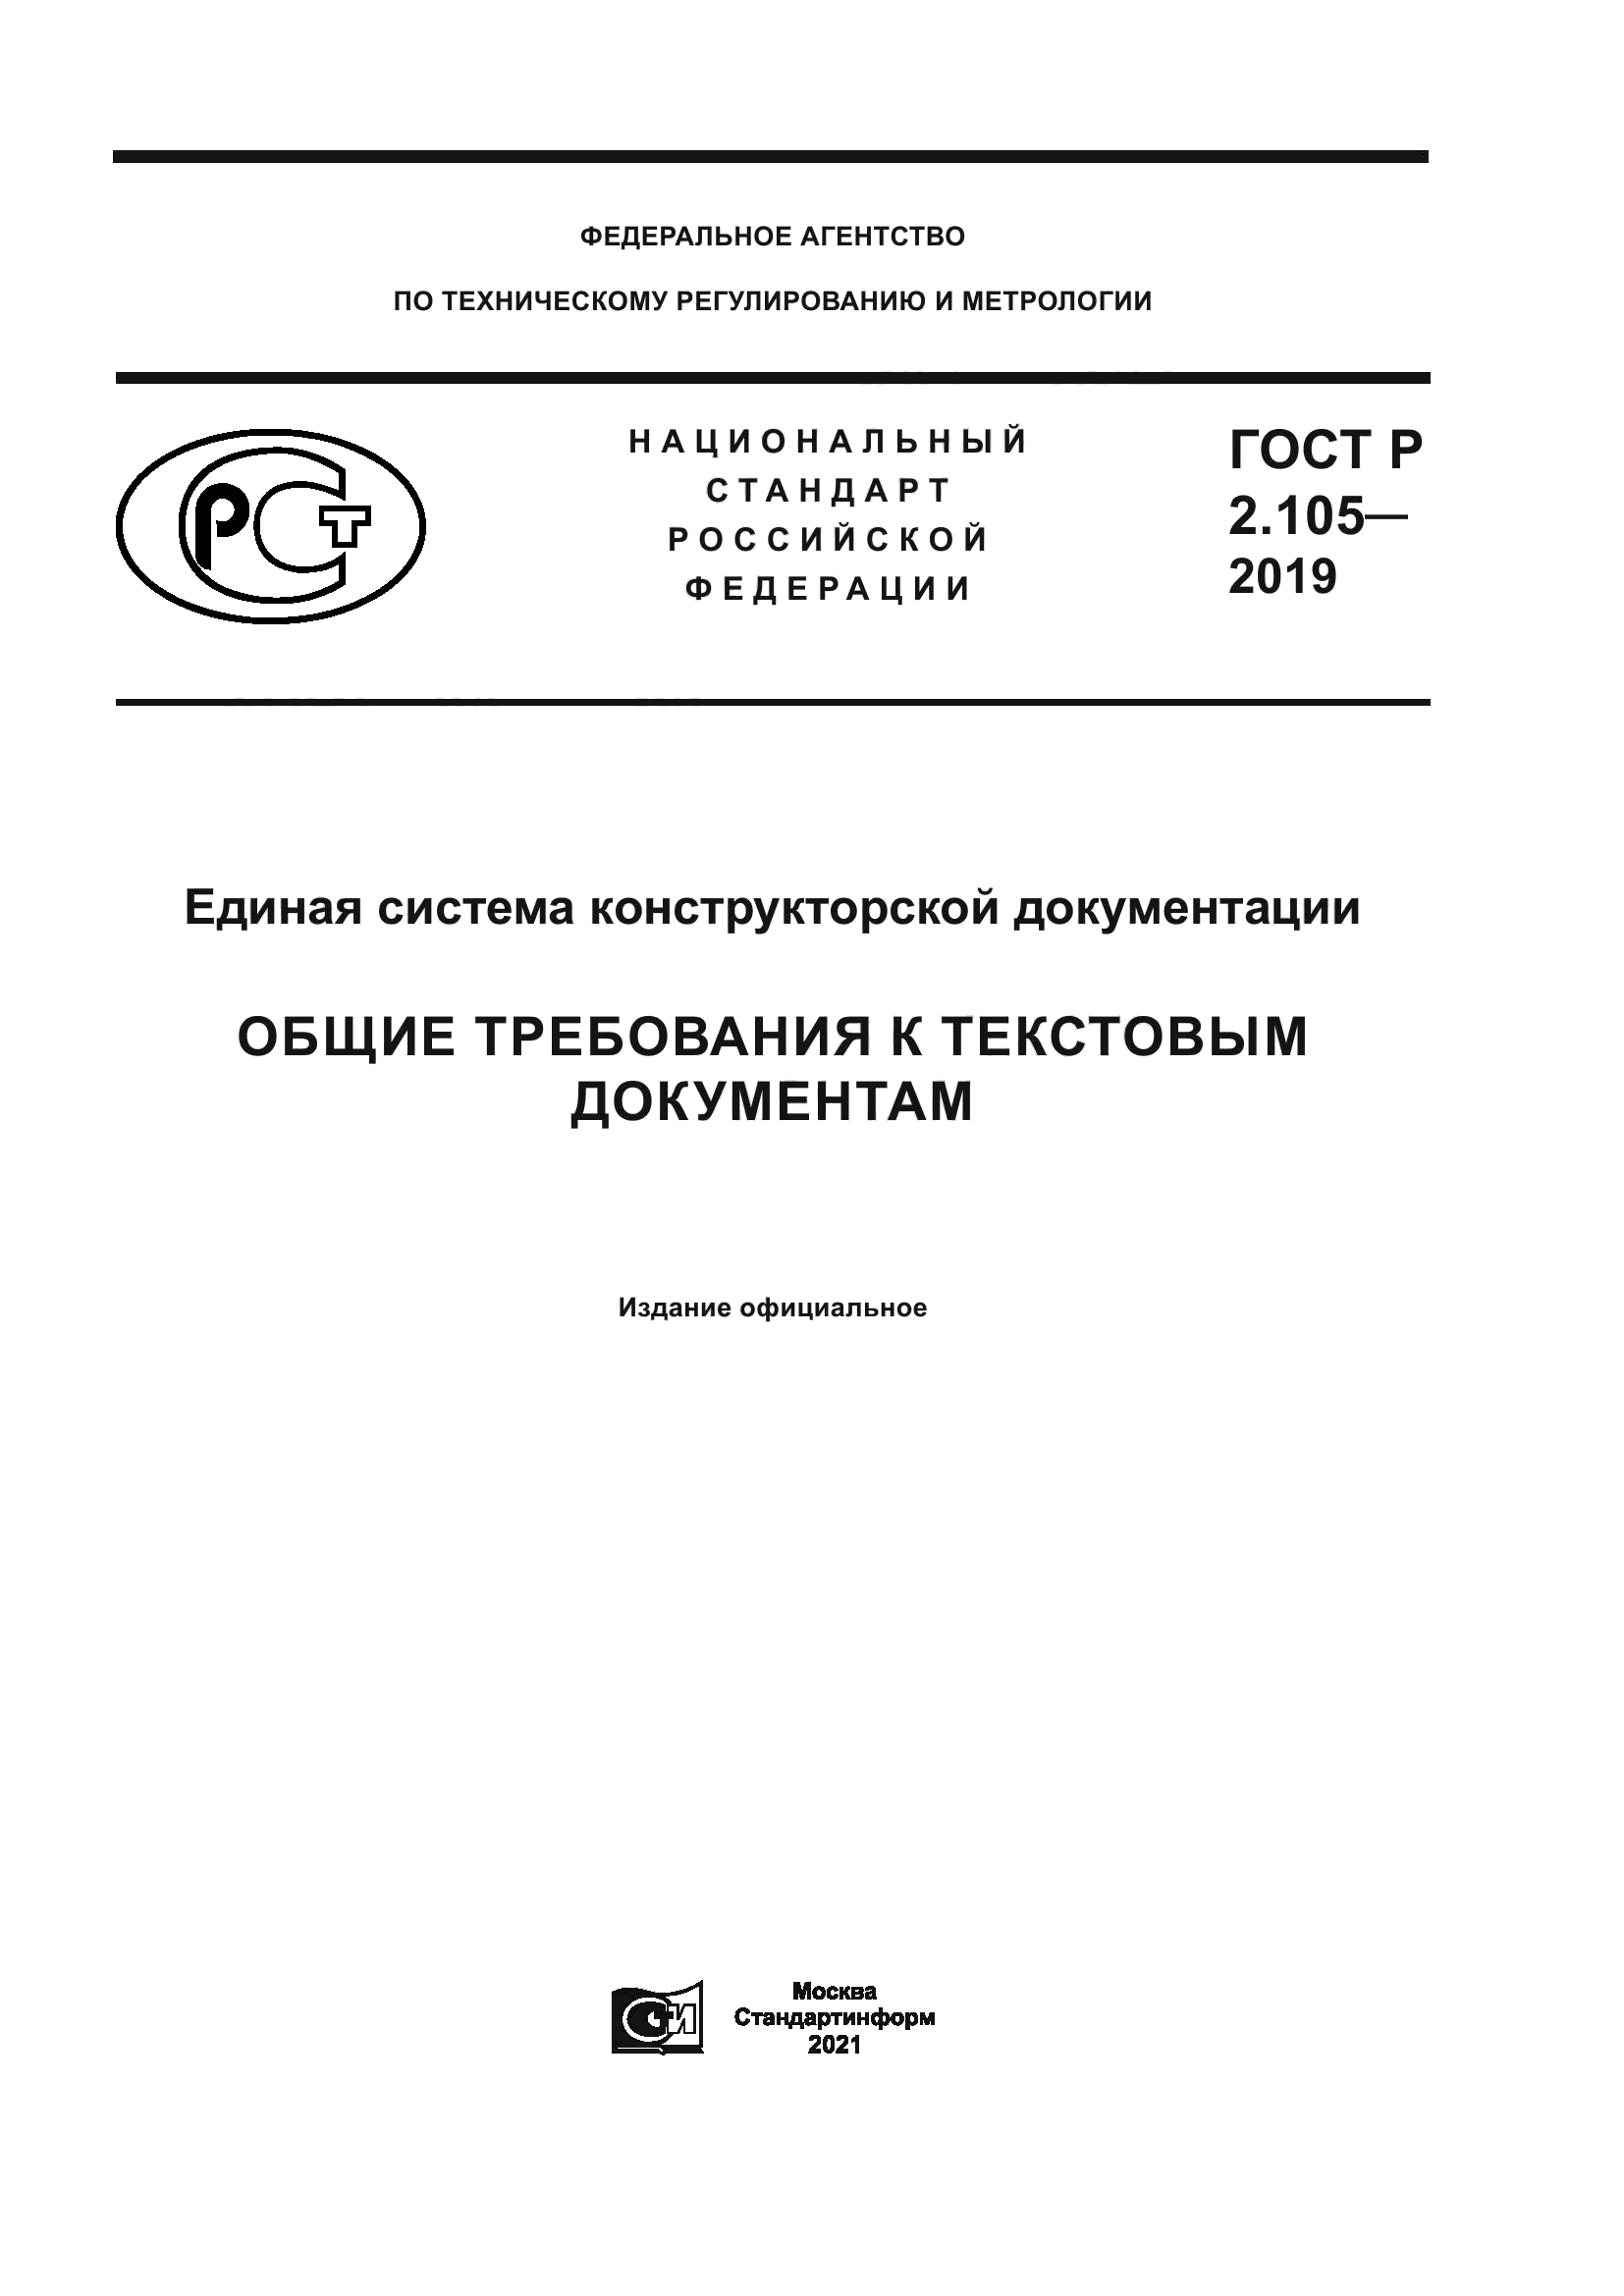 ГОСТ Р 2.105-2019